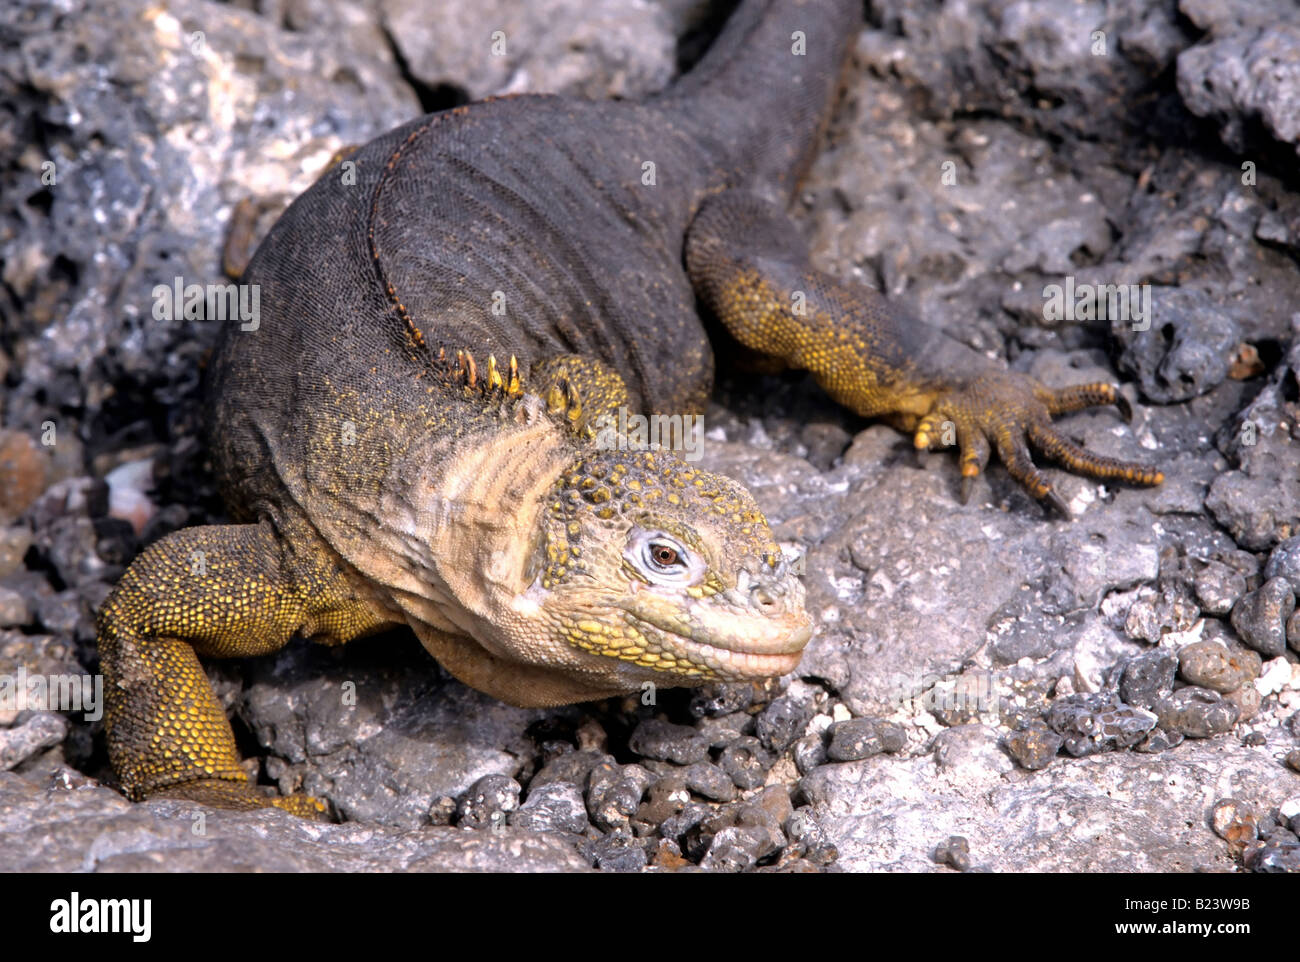 A land iguana conolophus subcristatus prowls through the rocks on South Plaza Island in the Galapagos Islands of Ecuador Stock Photo